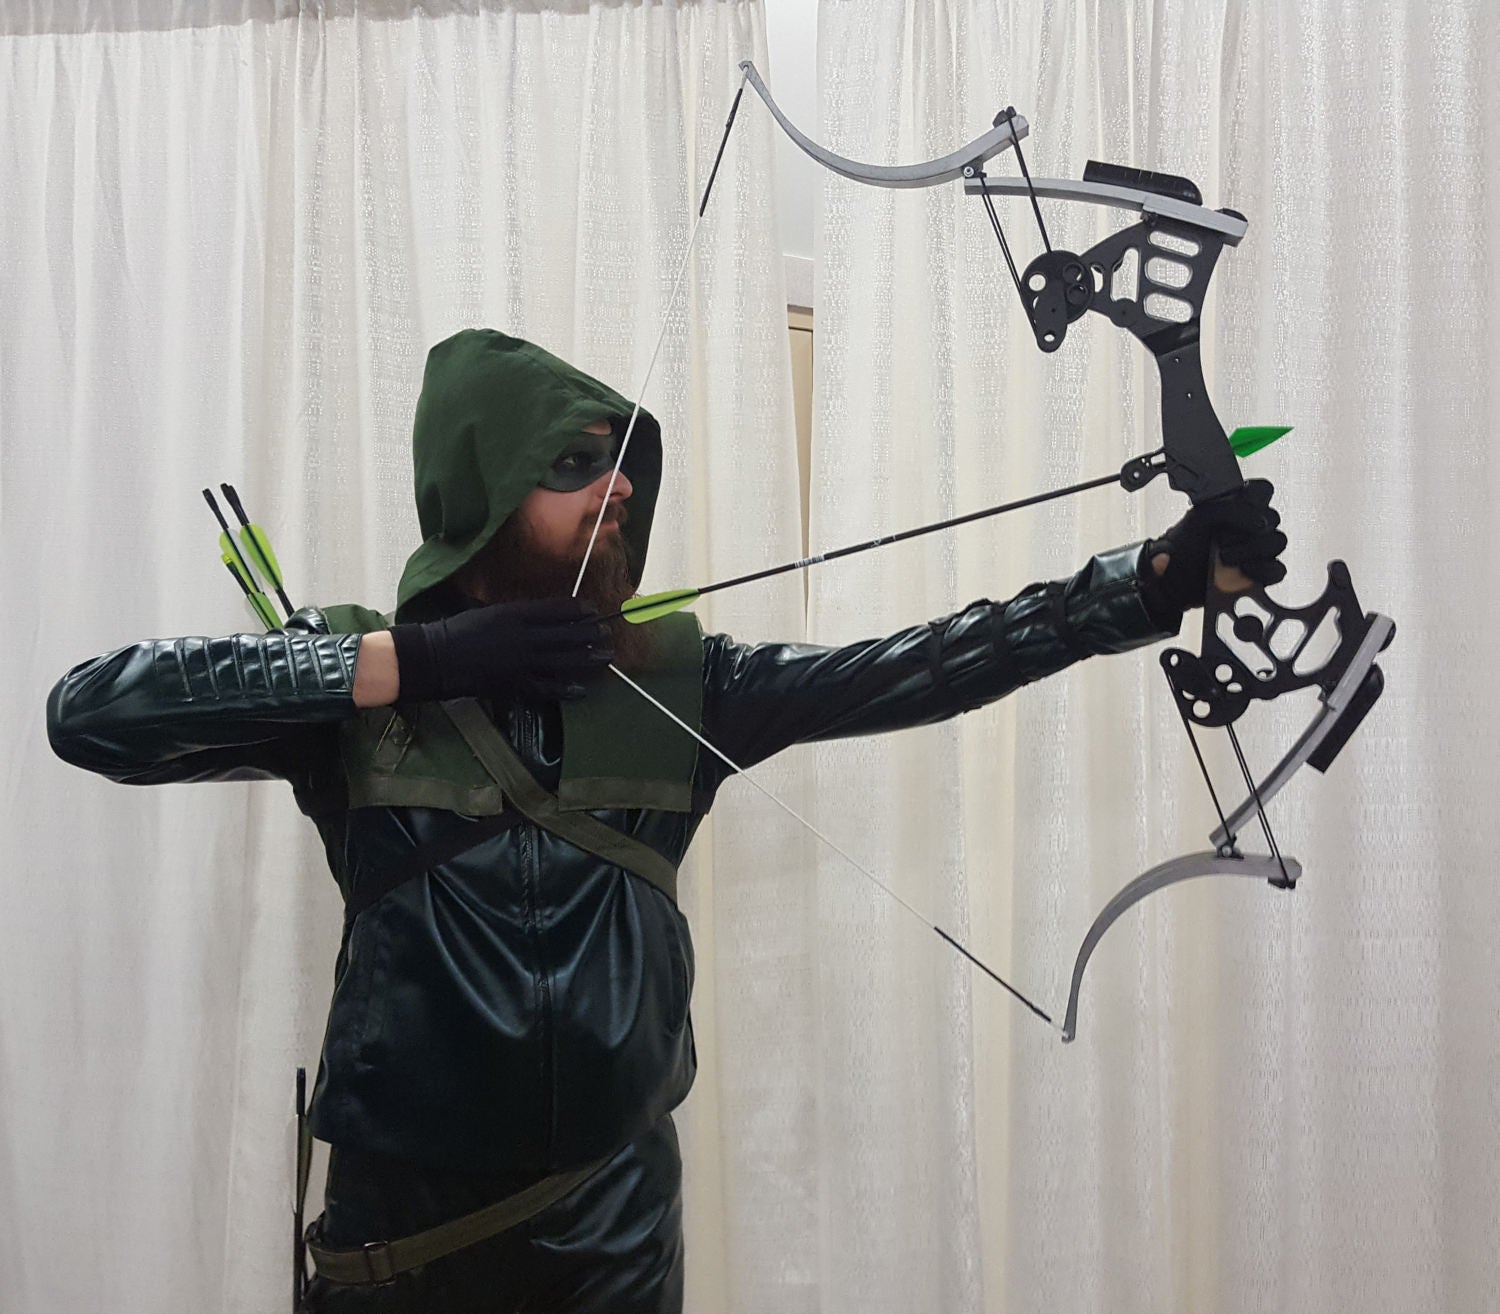 Green arrow compound bow